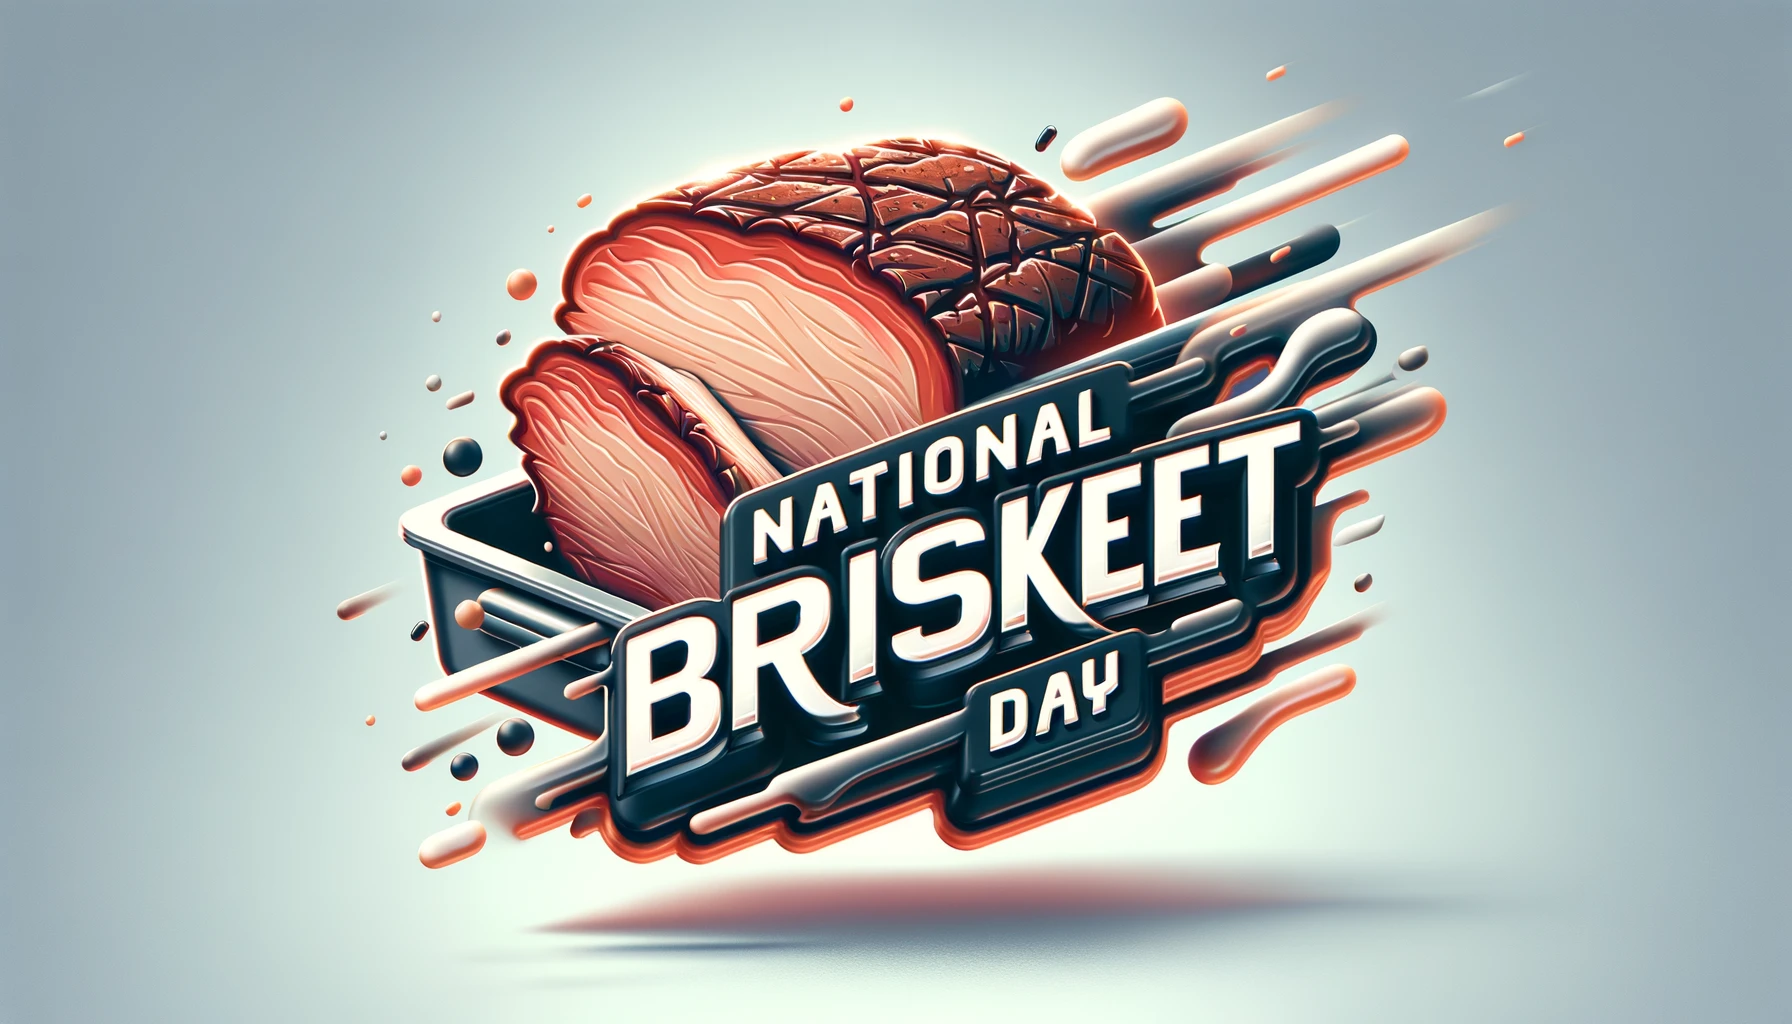 National Brisket Day